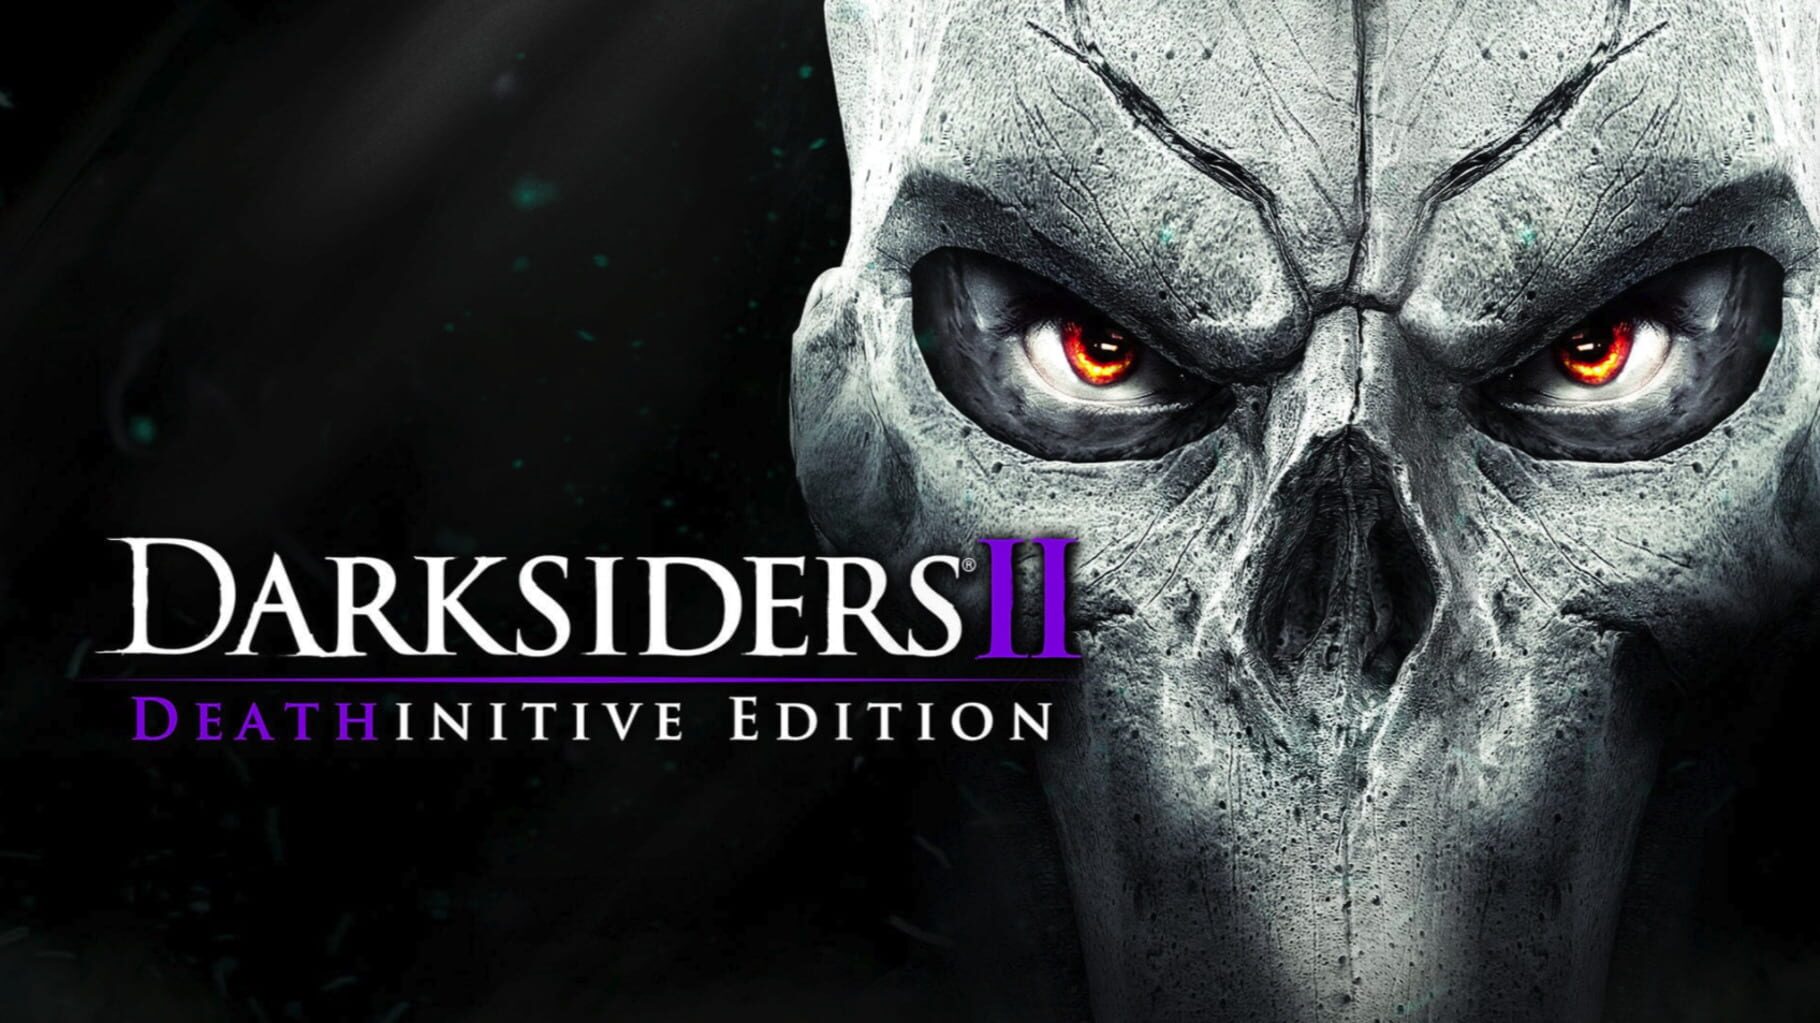 Darksiders II: Deathinitive Edition artwork